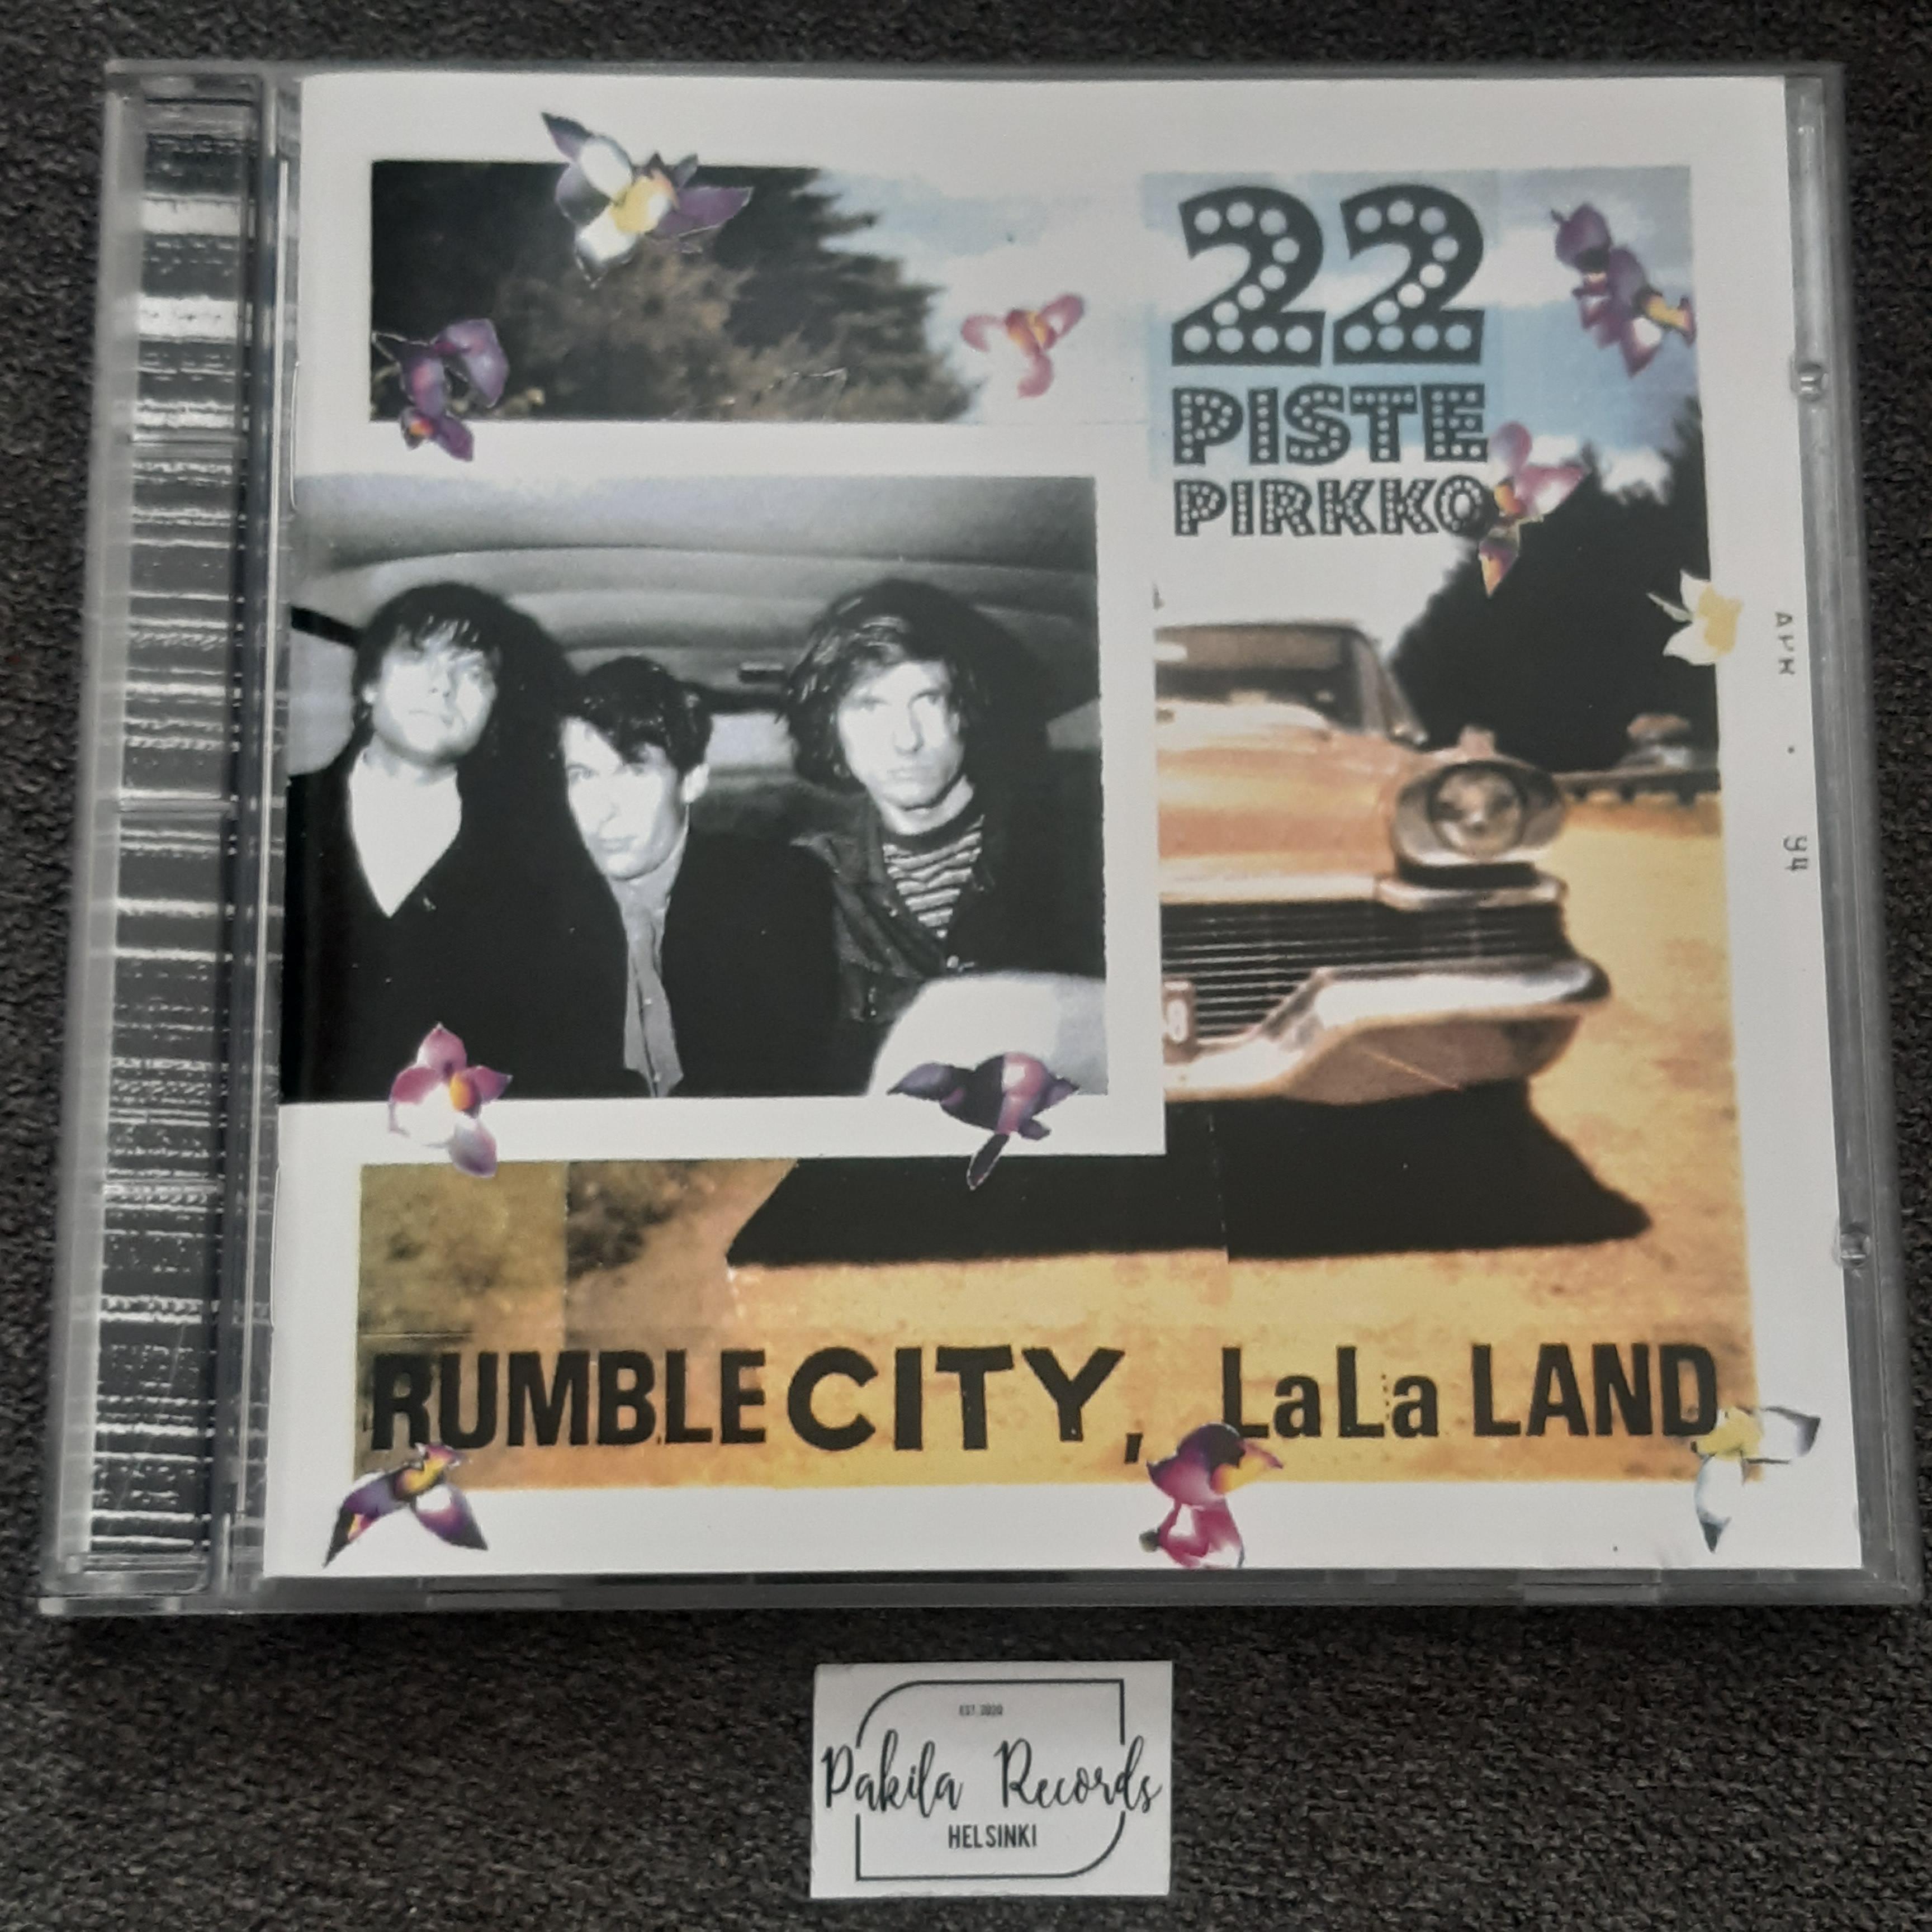 22 Pistepirkko - Rumble City La La Land - CD (käytetty)